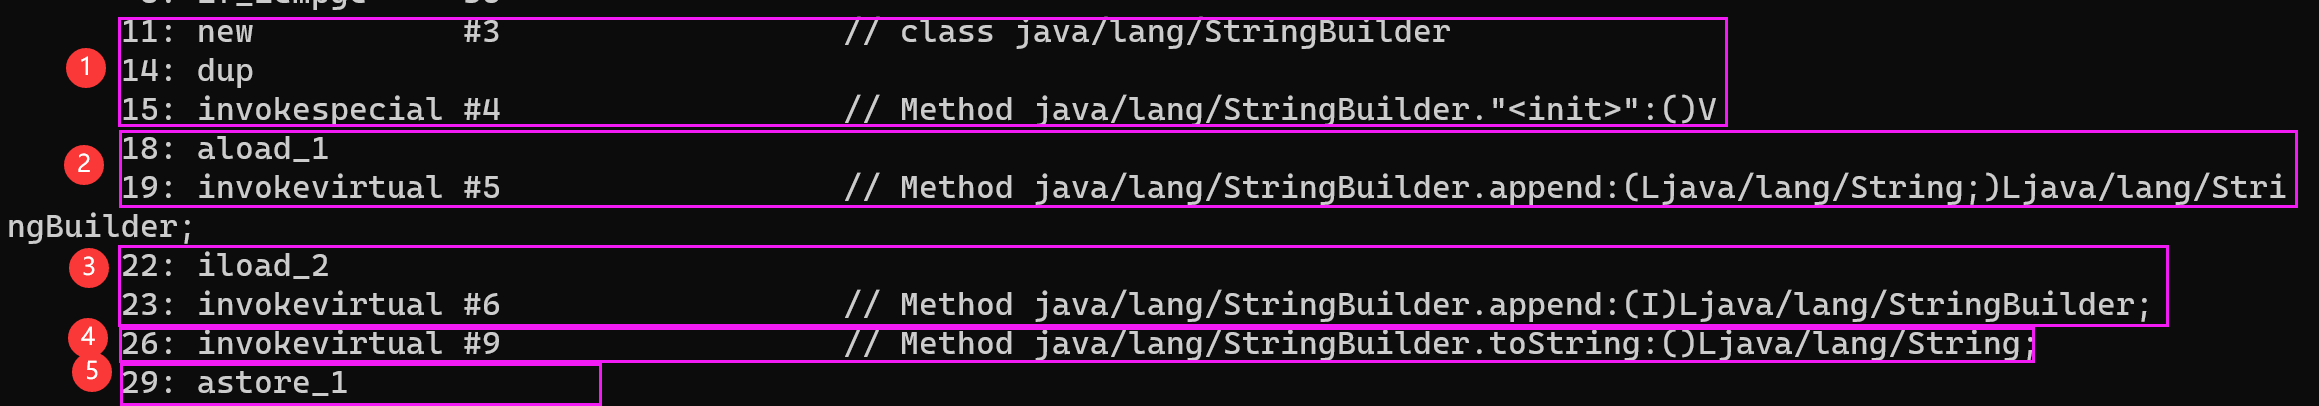 【Java】String类的理解及字符串常量池